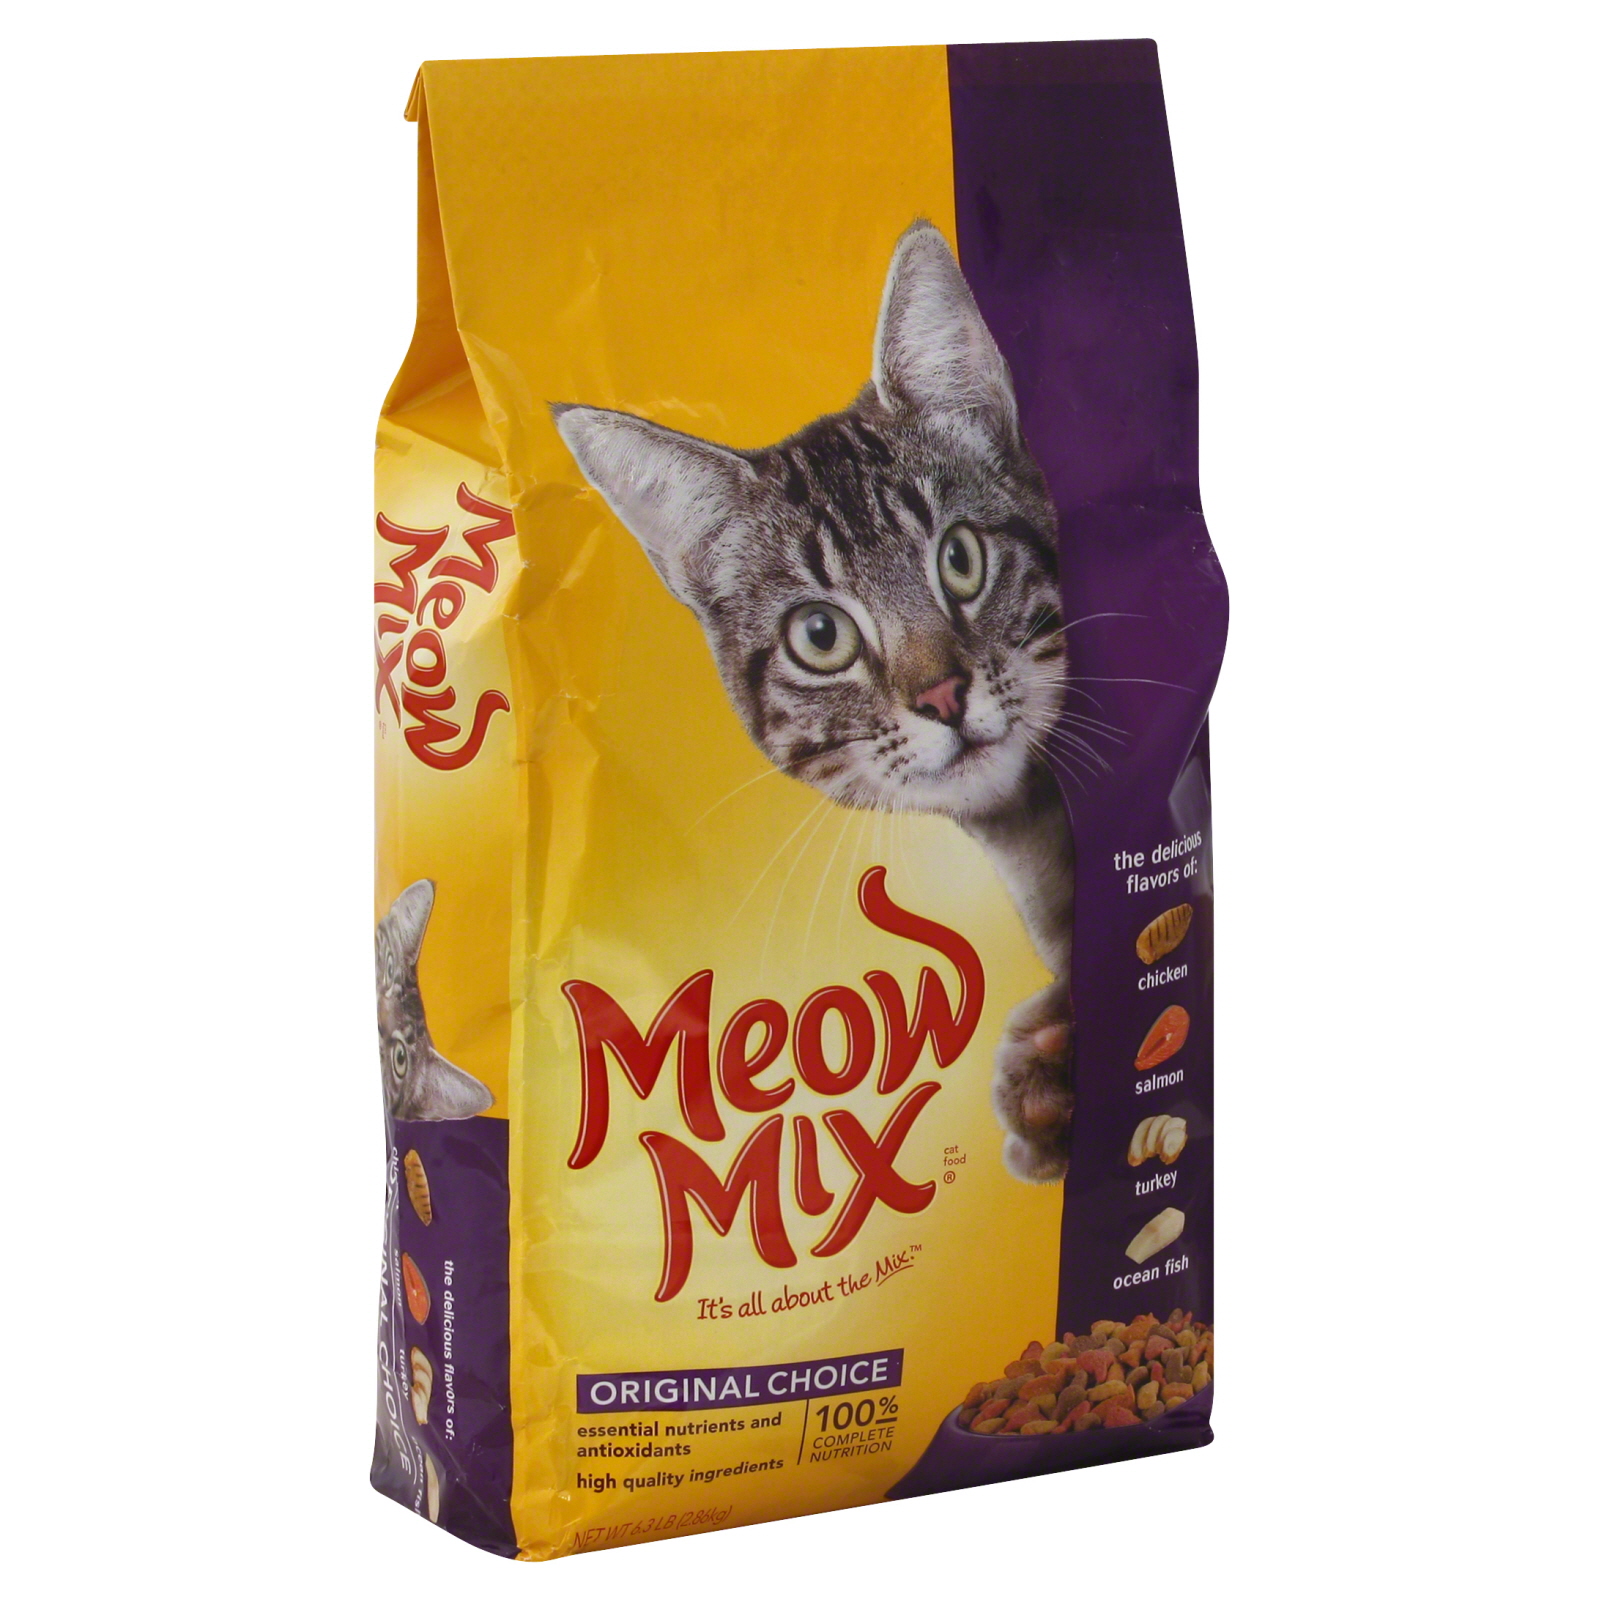 Meow Mix (R) Original Choice Dry Cat Food 6.3 lb. Bag